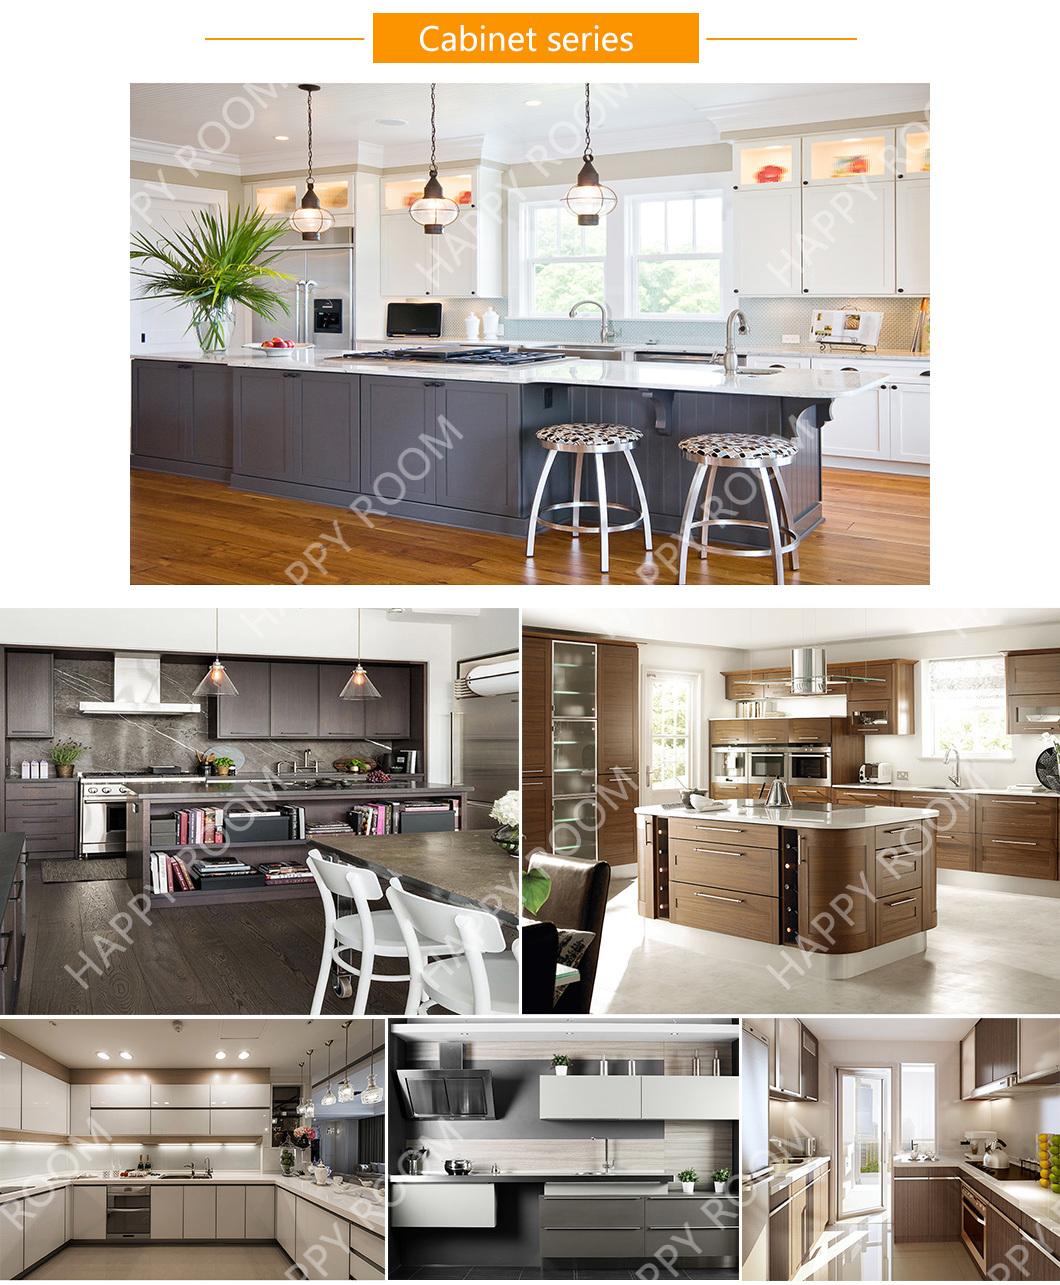 2021 Happyroom Color Aluminum/Aluminium Profile Kitchen Cabinets Furniture